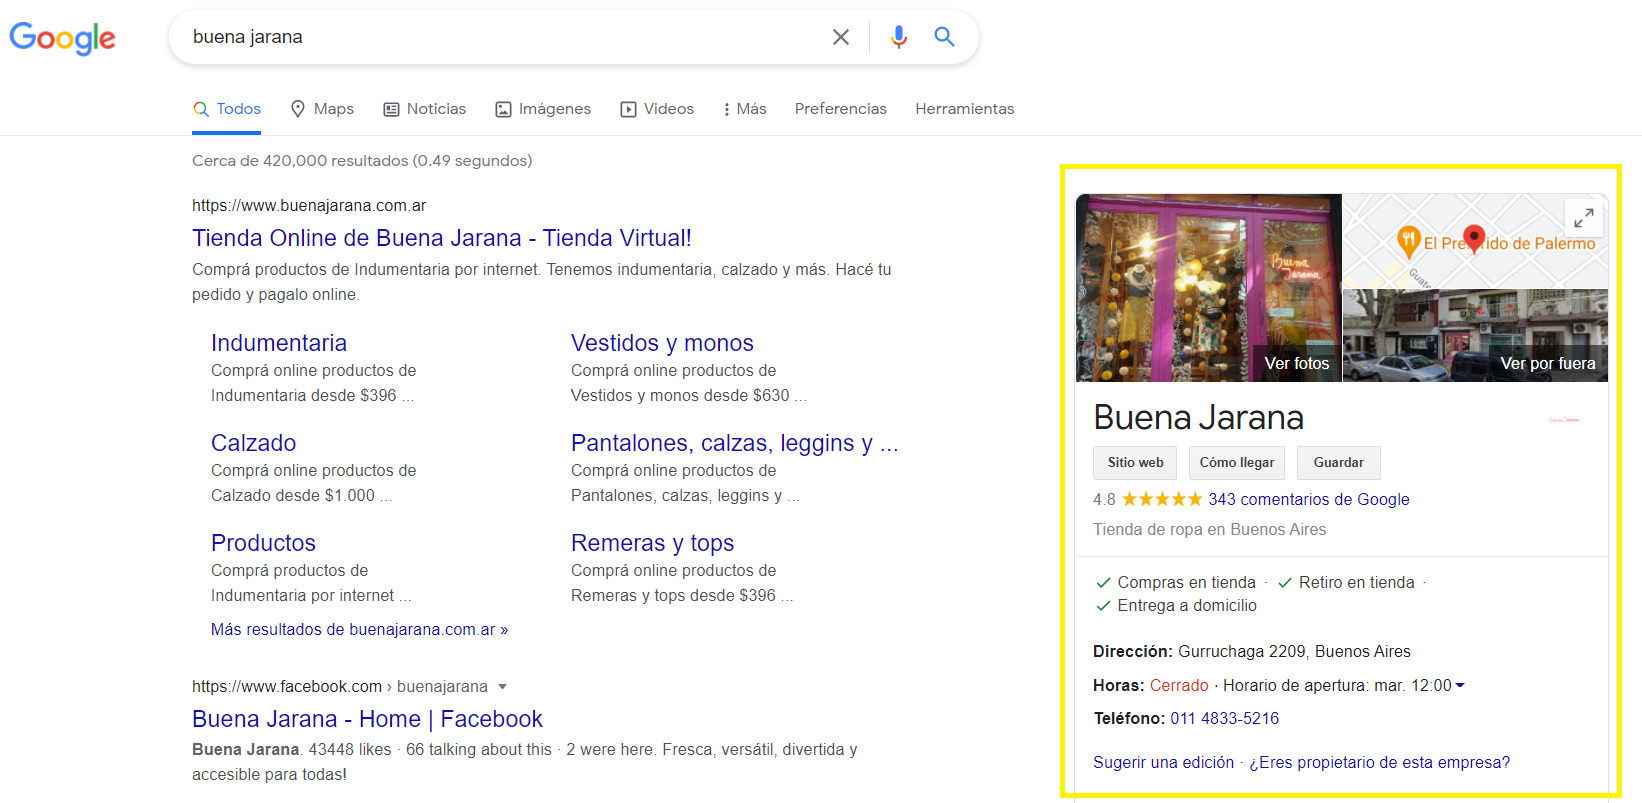 google my business ejemplo buena jarana